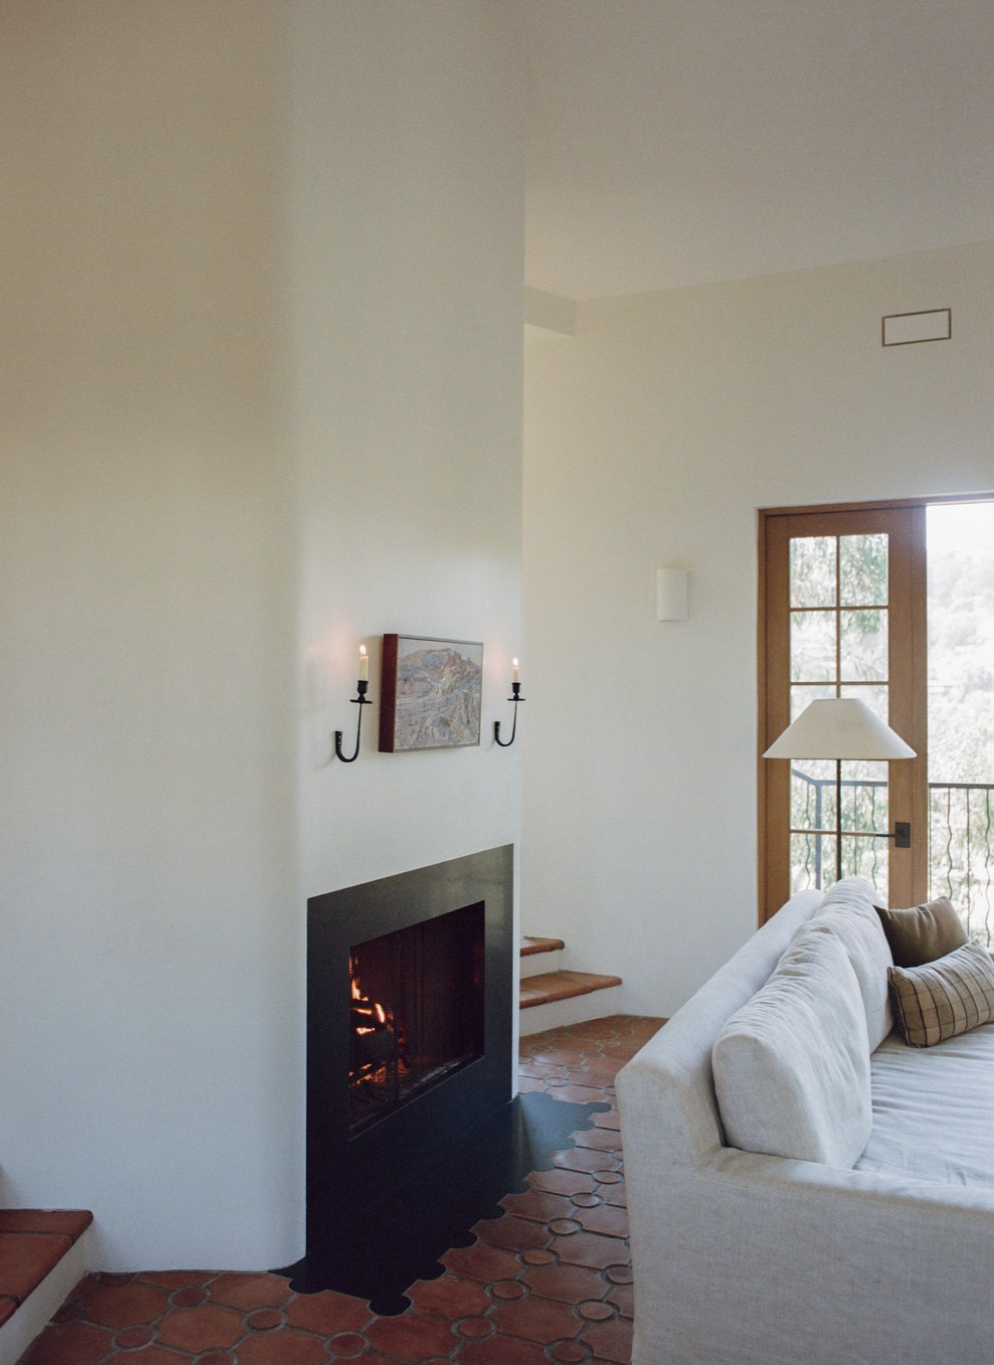 A living room with original fireplace